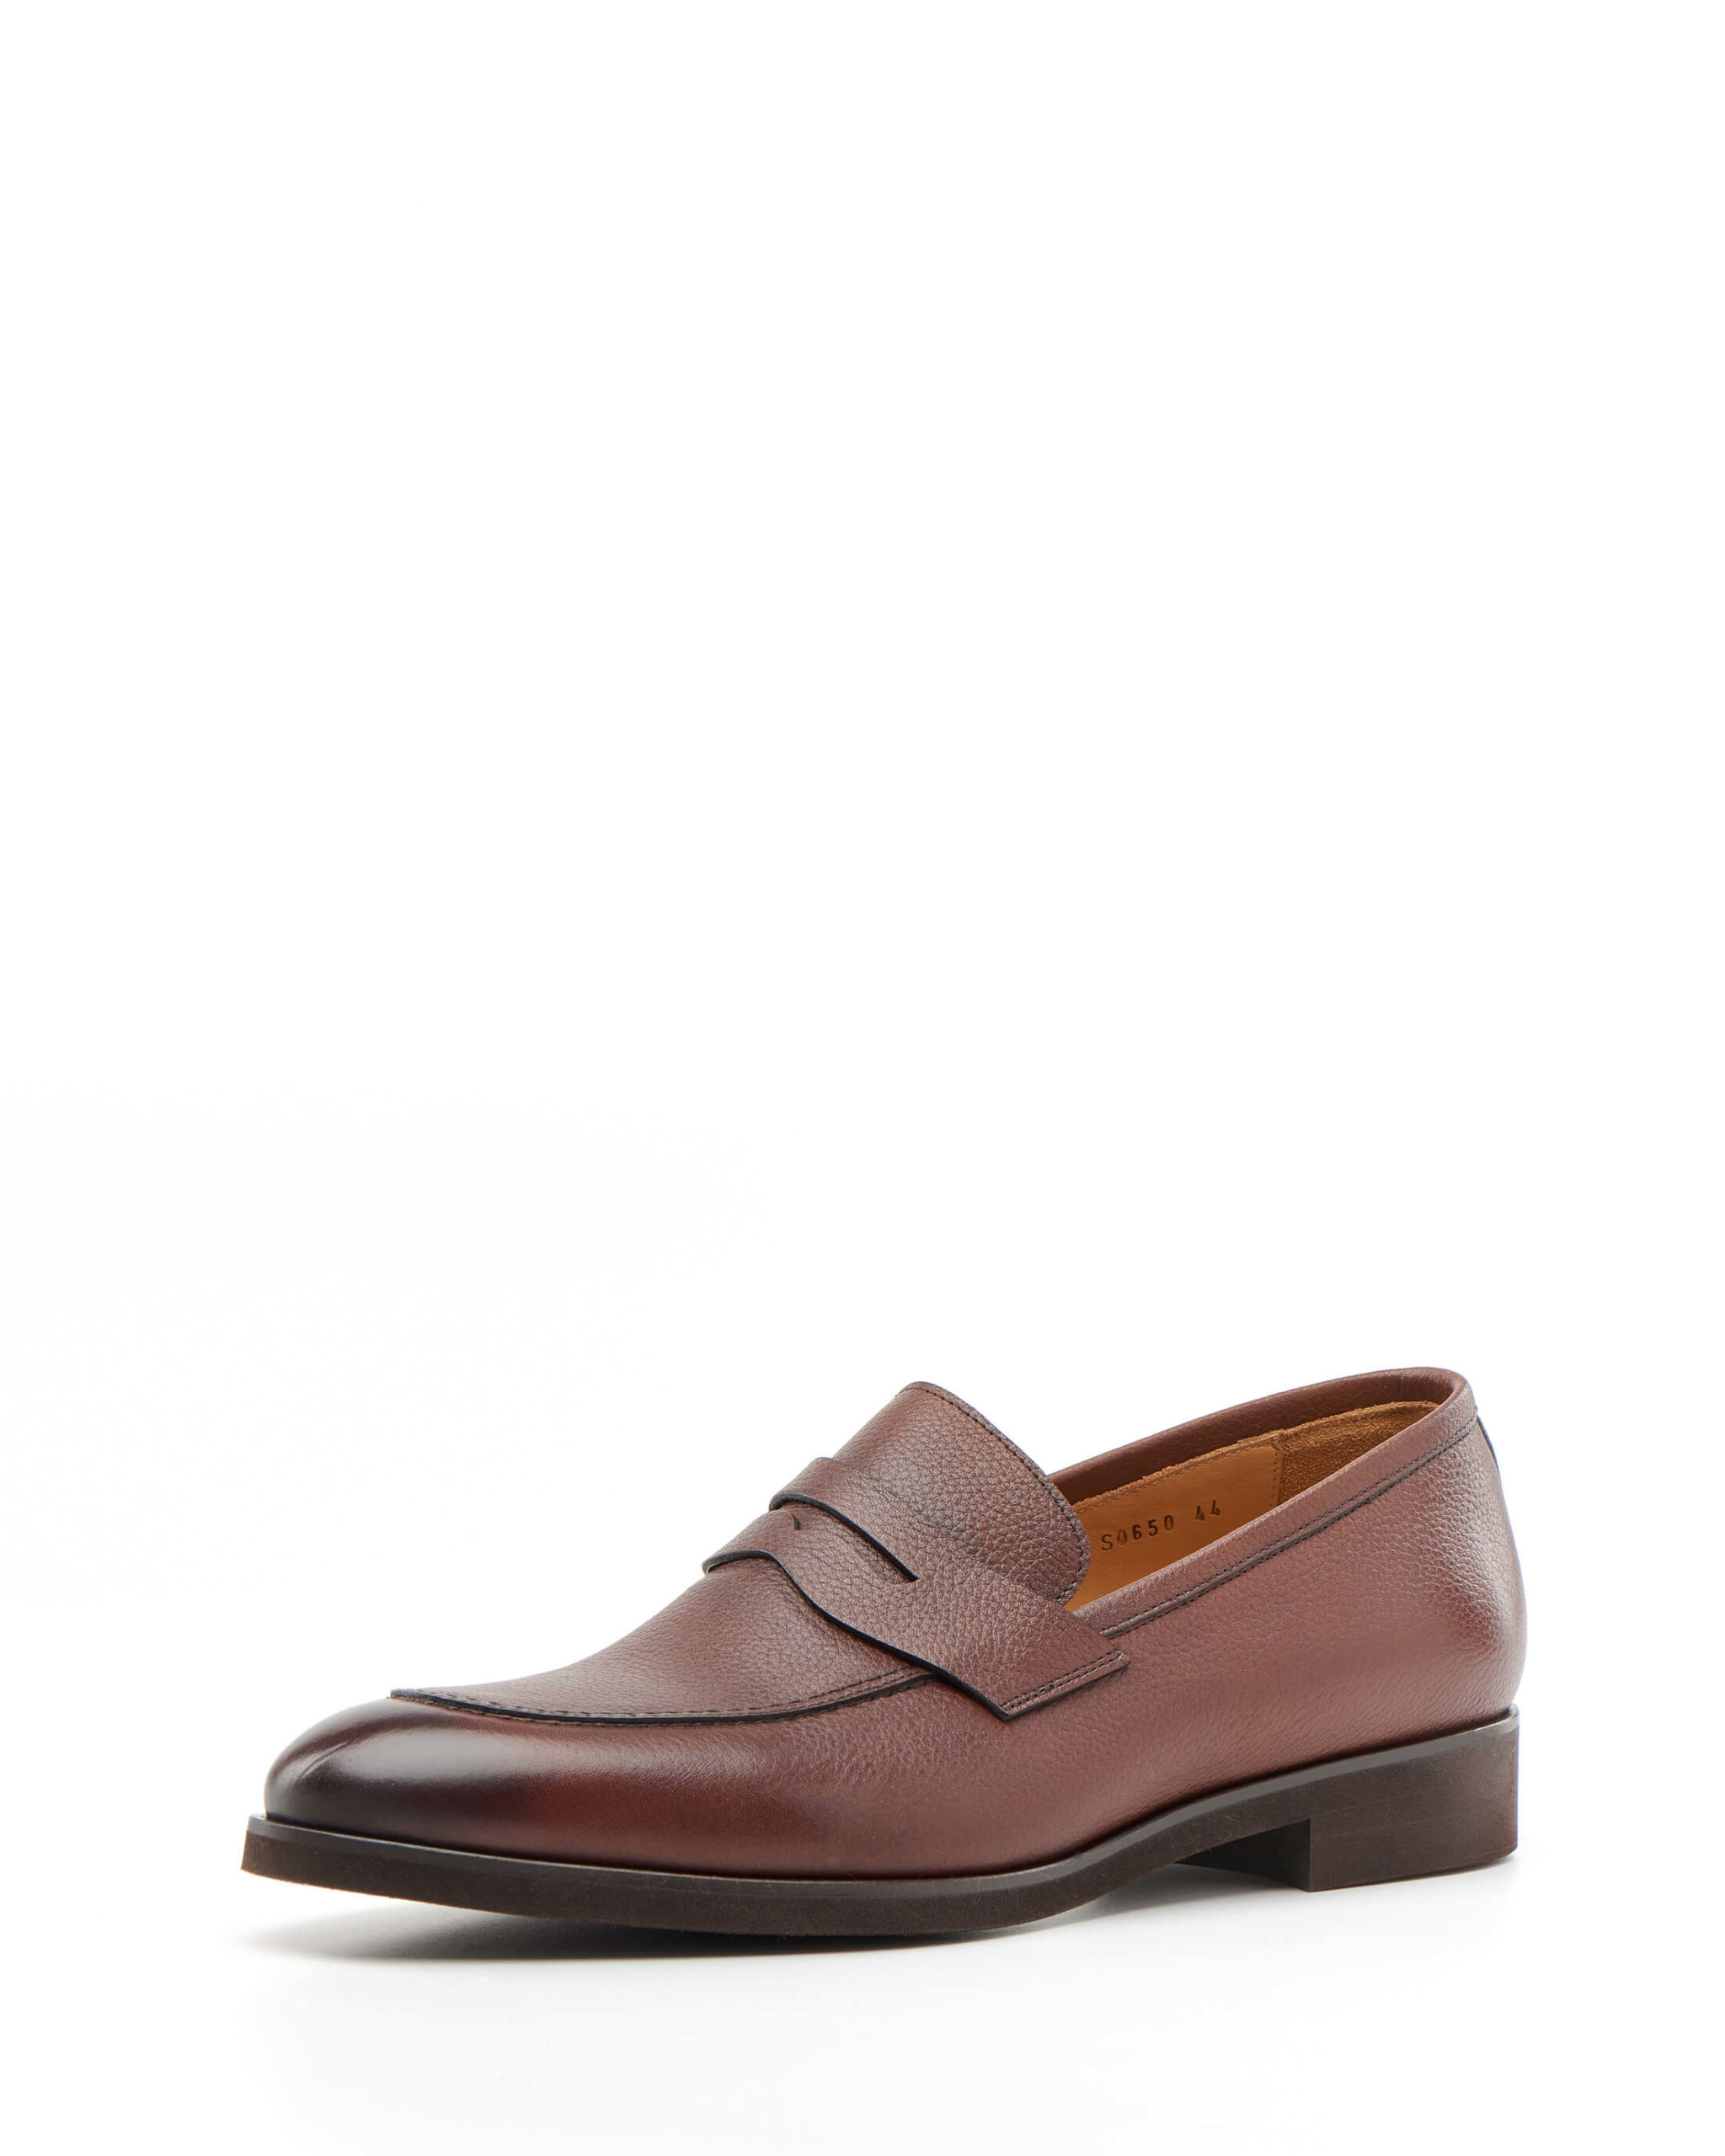 Luis Onofre Portuguese Shoes FW22 – HS0650_10 – Pocillo Brown-2